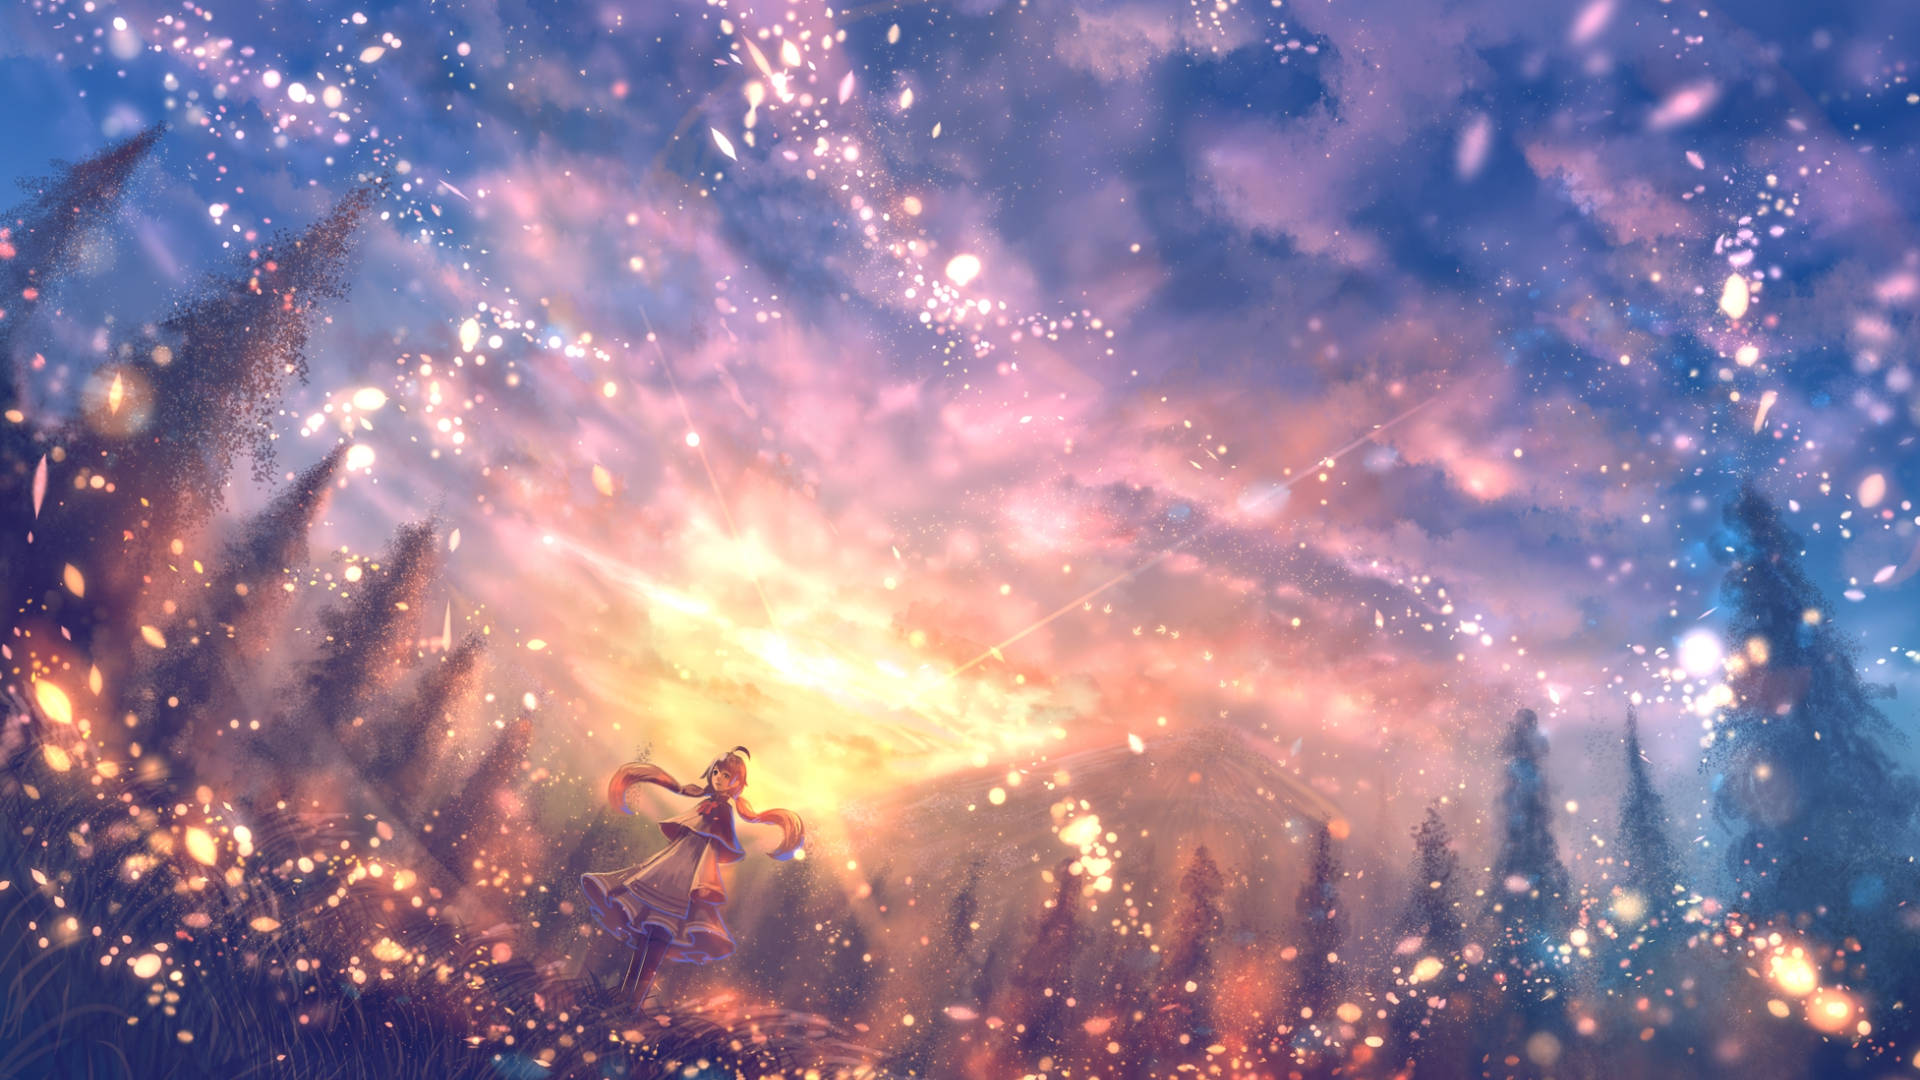 Beautiful Anime Magical Sunset